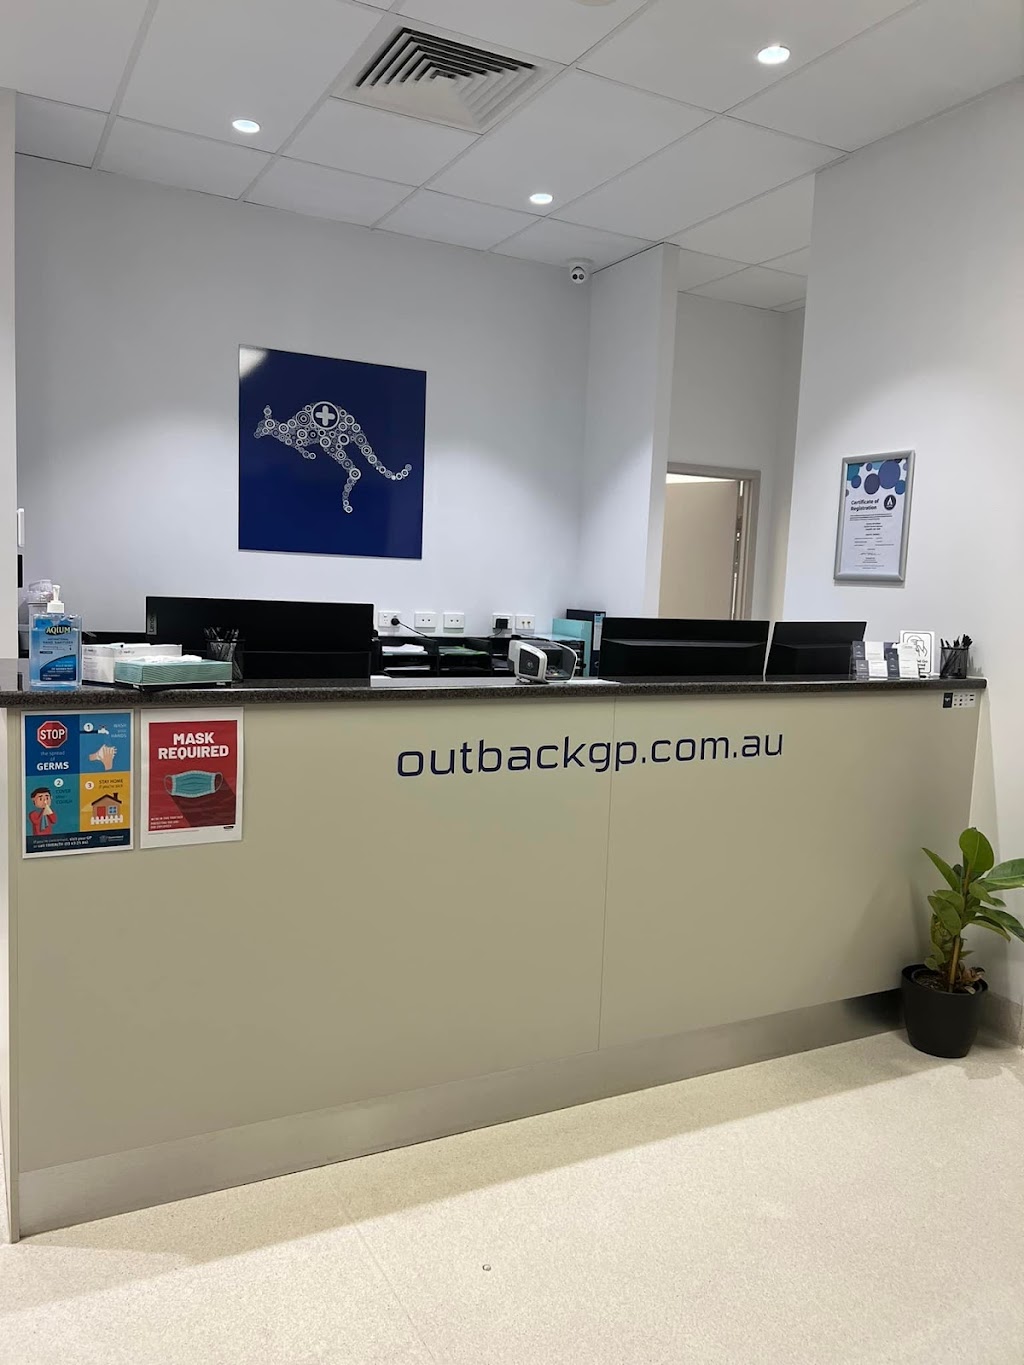 Outback GP Calliope | hospital | Unit 16/2041 Dawson Hwy, Calliope QLD 4680, Australia | 0749108614 OR +61 7 4910 8614